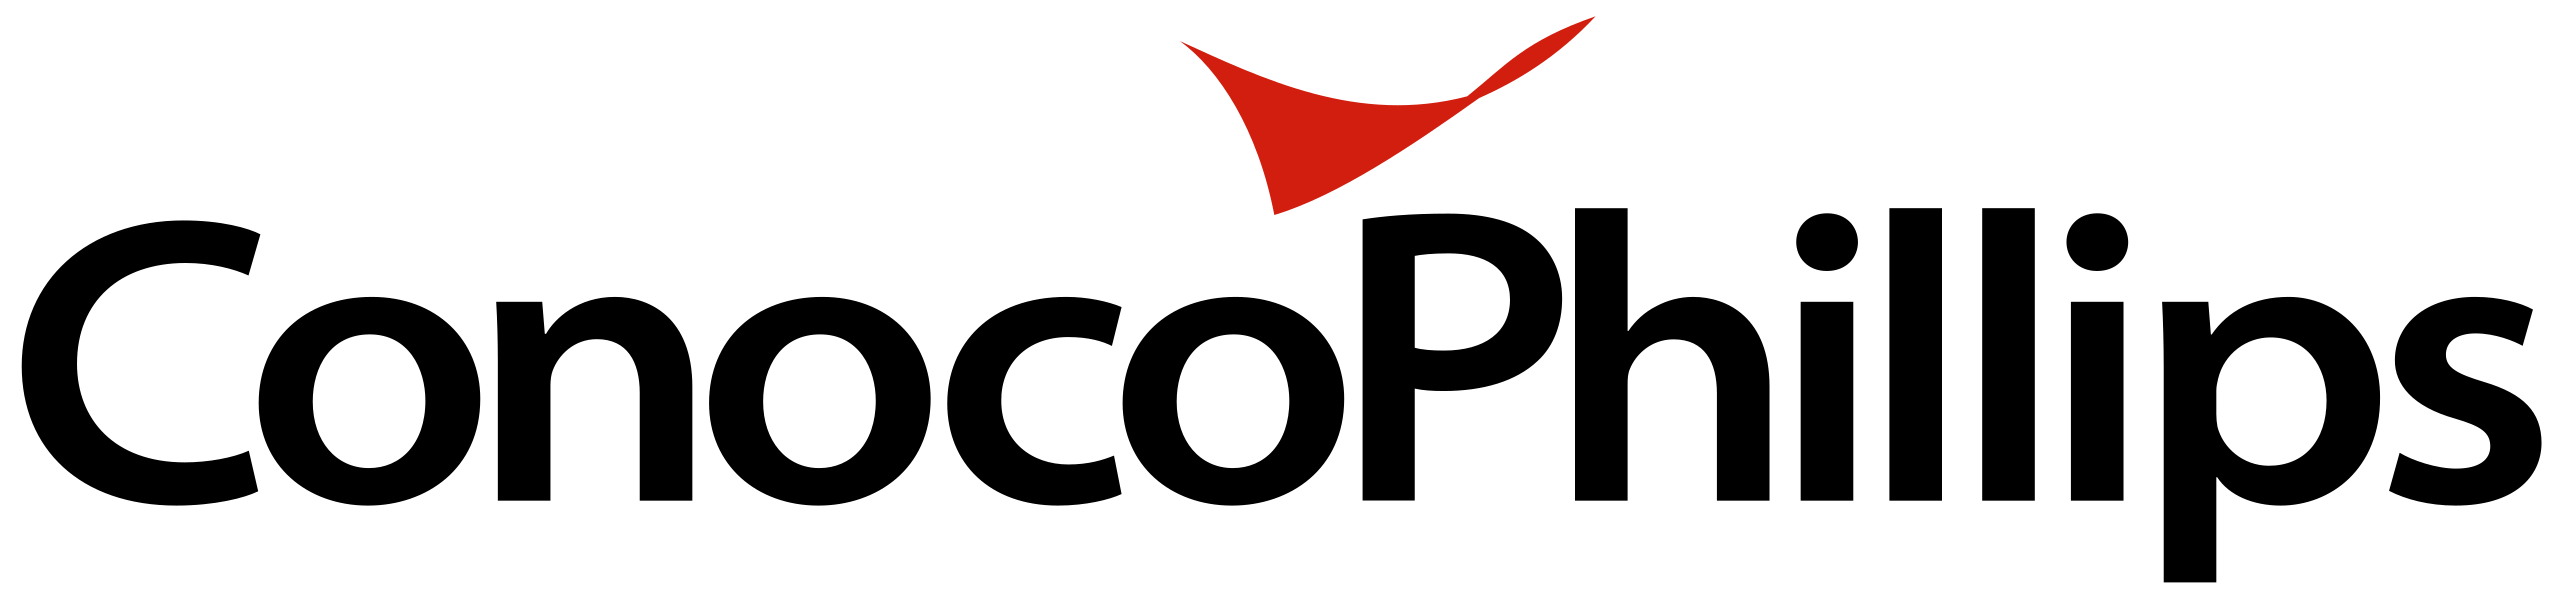 ConocoPhillips_Logo.png